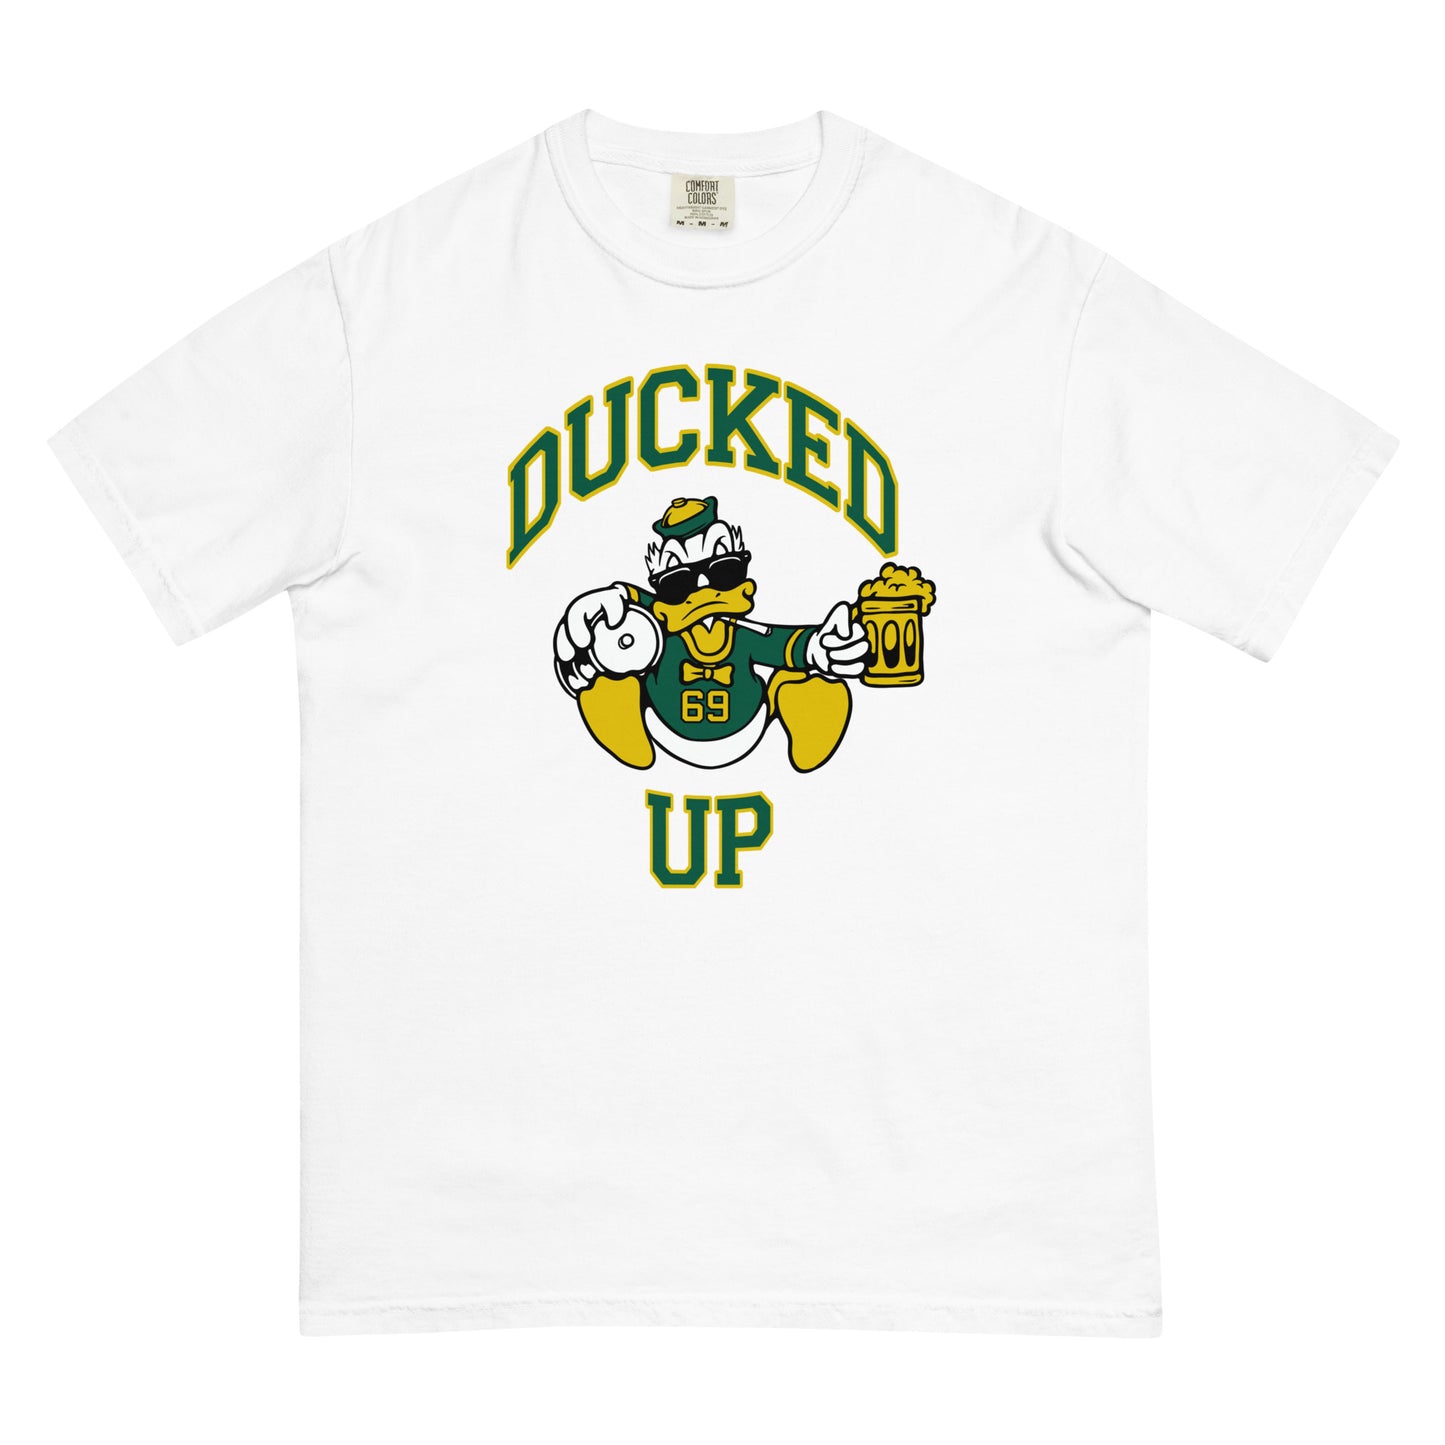 Ducked Up II t-shirt